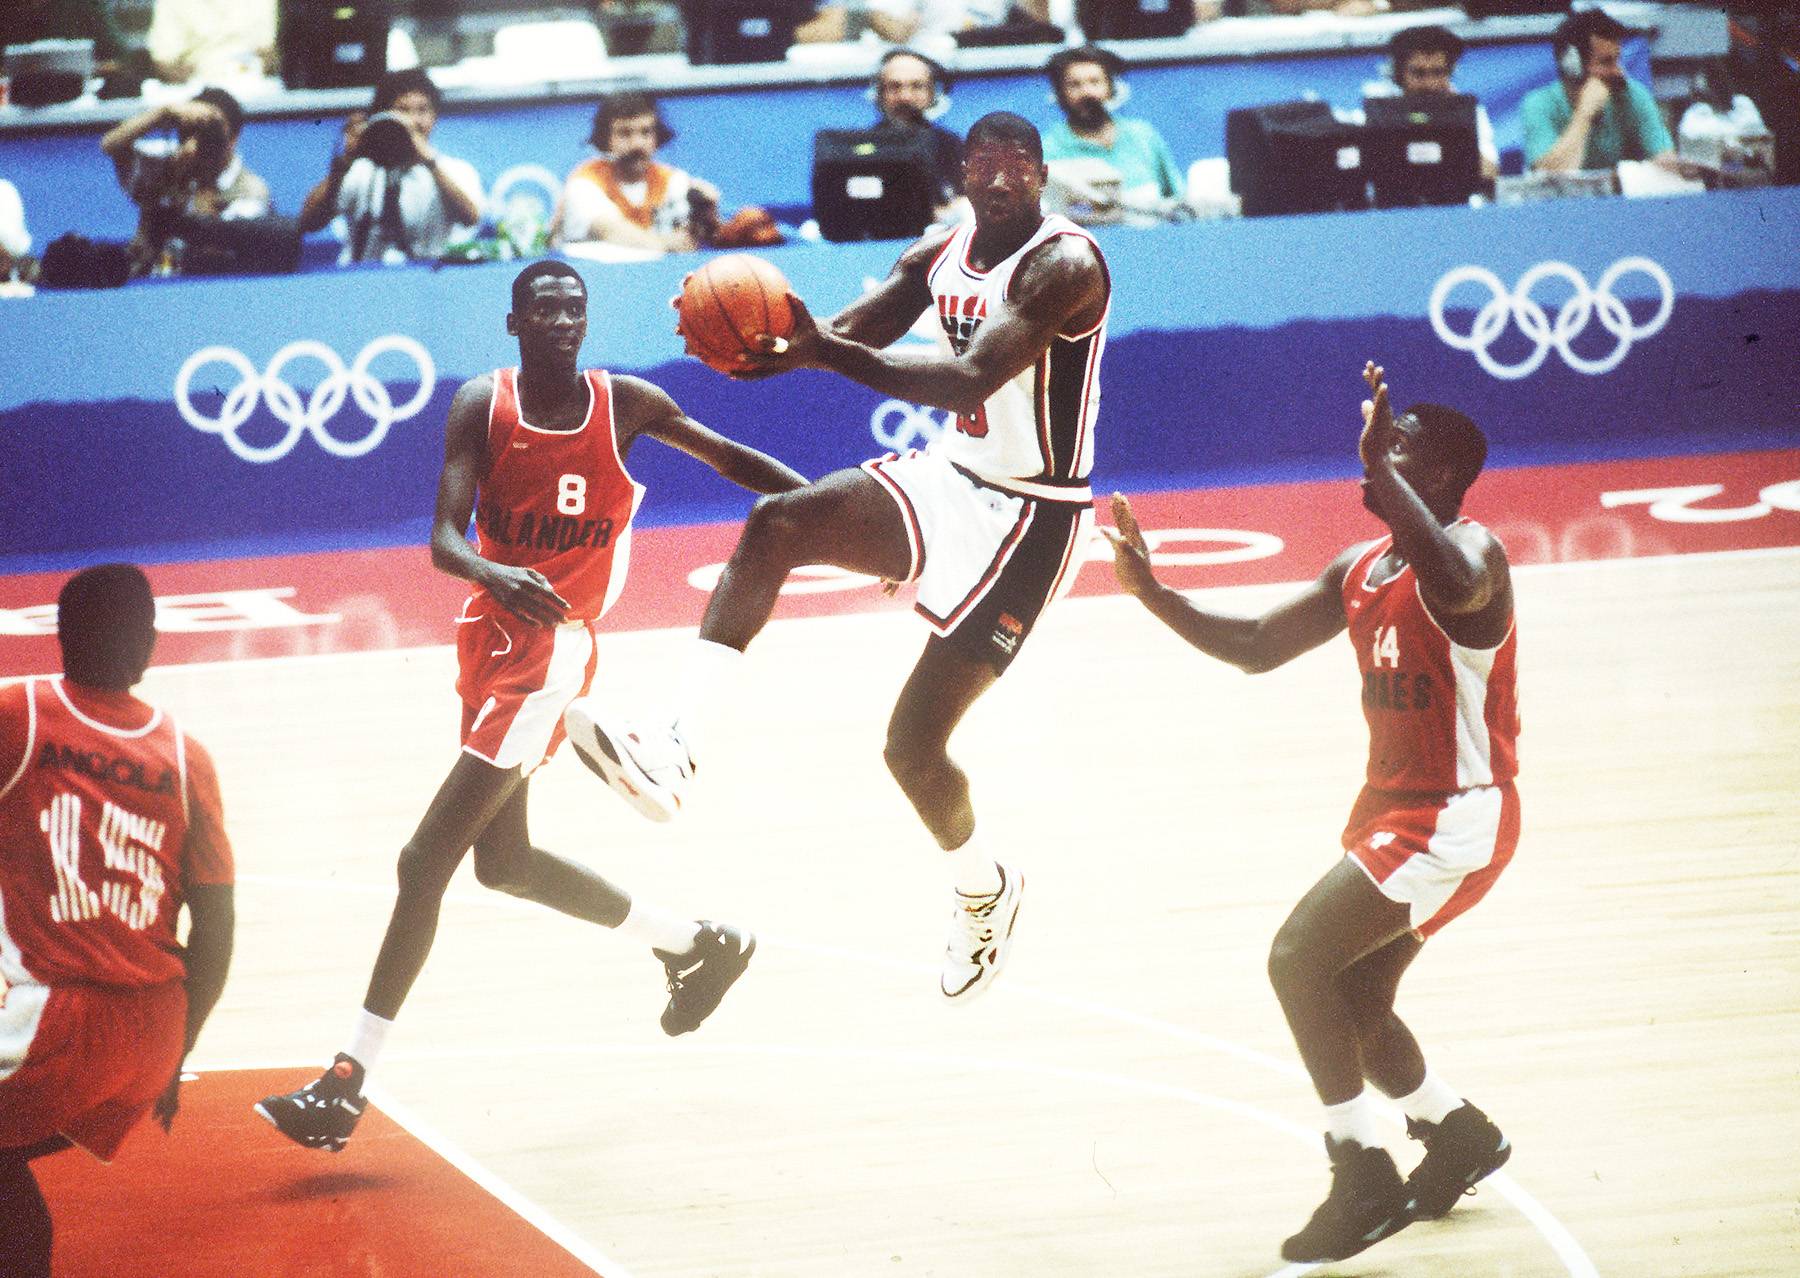 Watch Him Fly - Magic Johnson soars above players of team Angola. (Photo: DPA /LANDOV)